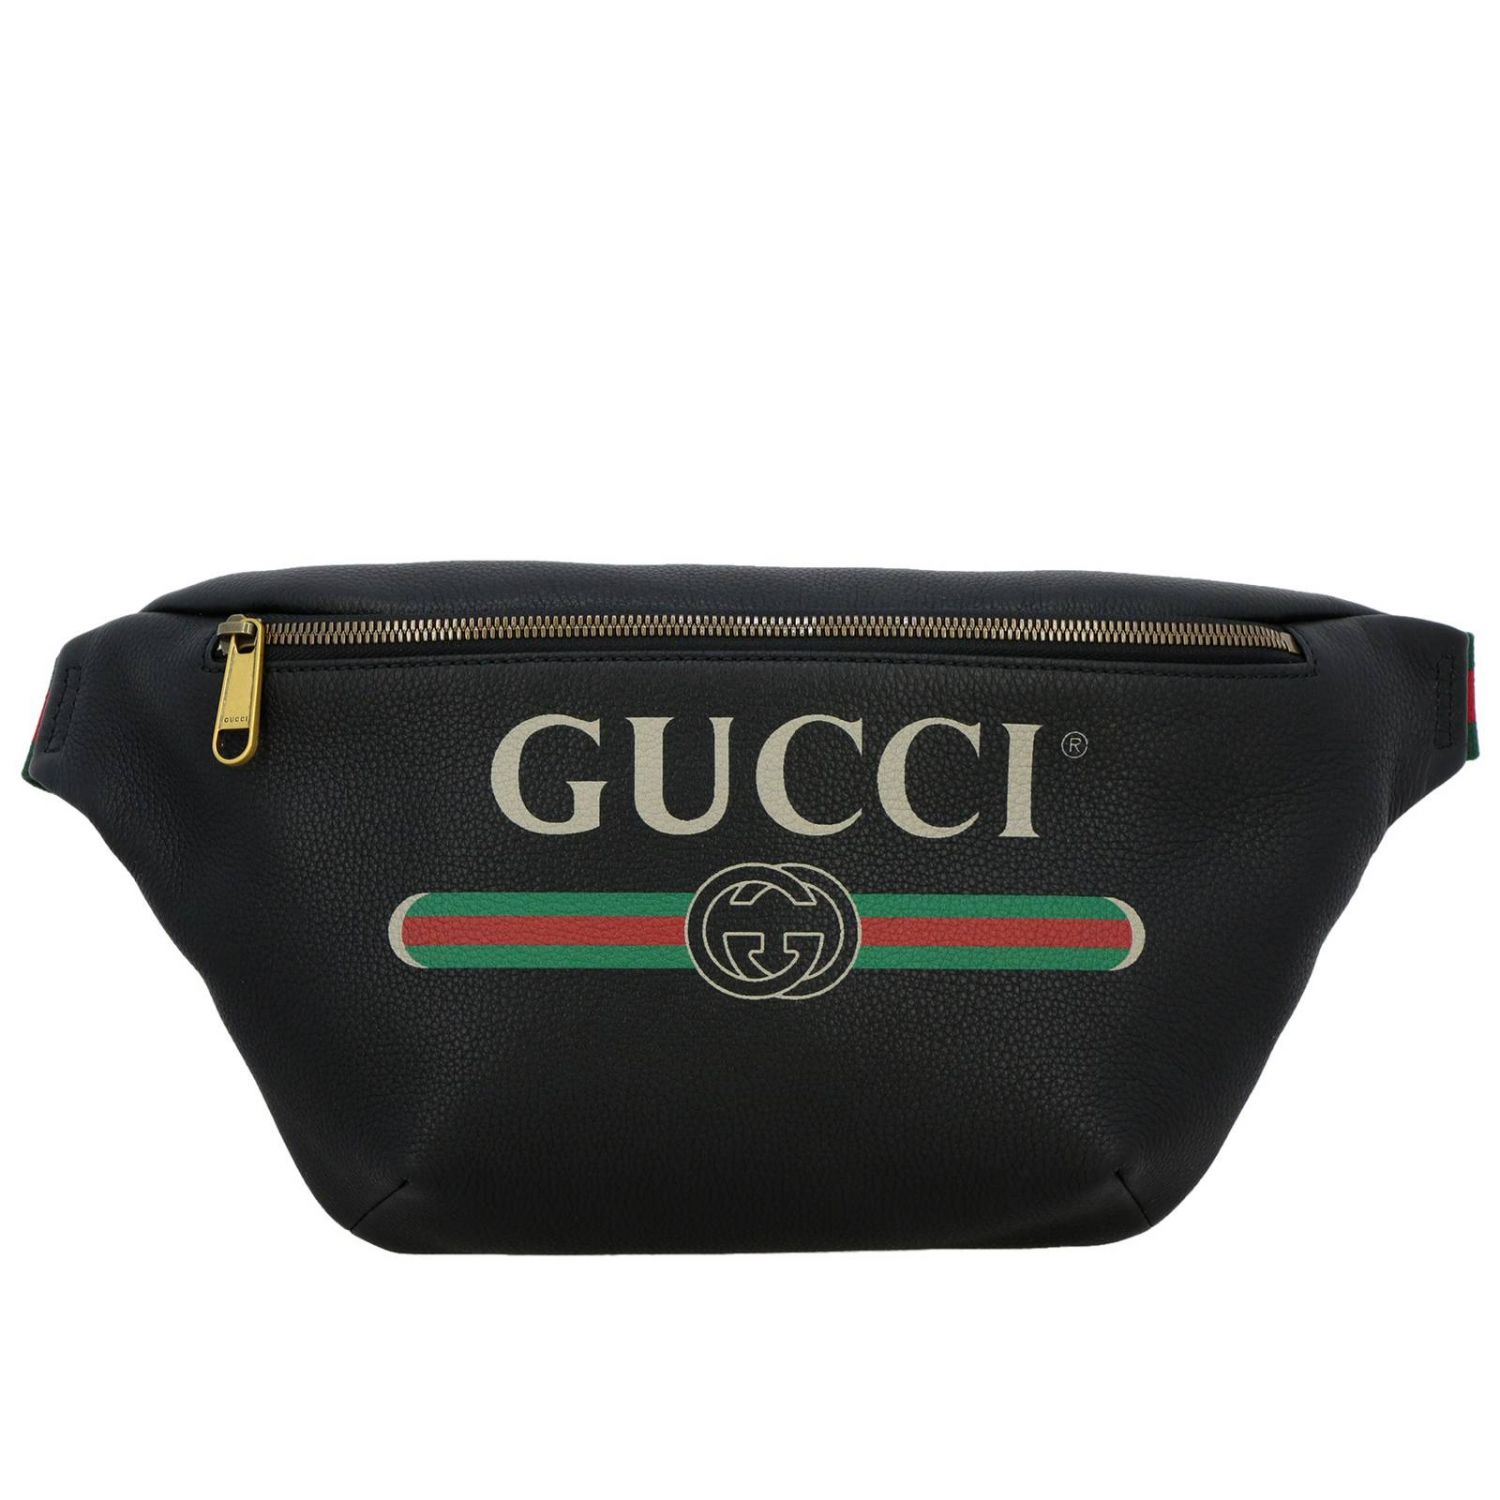 GUCCI: Bags men | Bags Gucci Men Black | Bags Gucci 530412 0GCCT Giglio EN